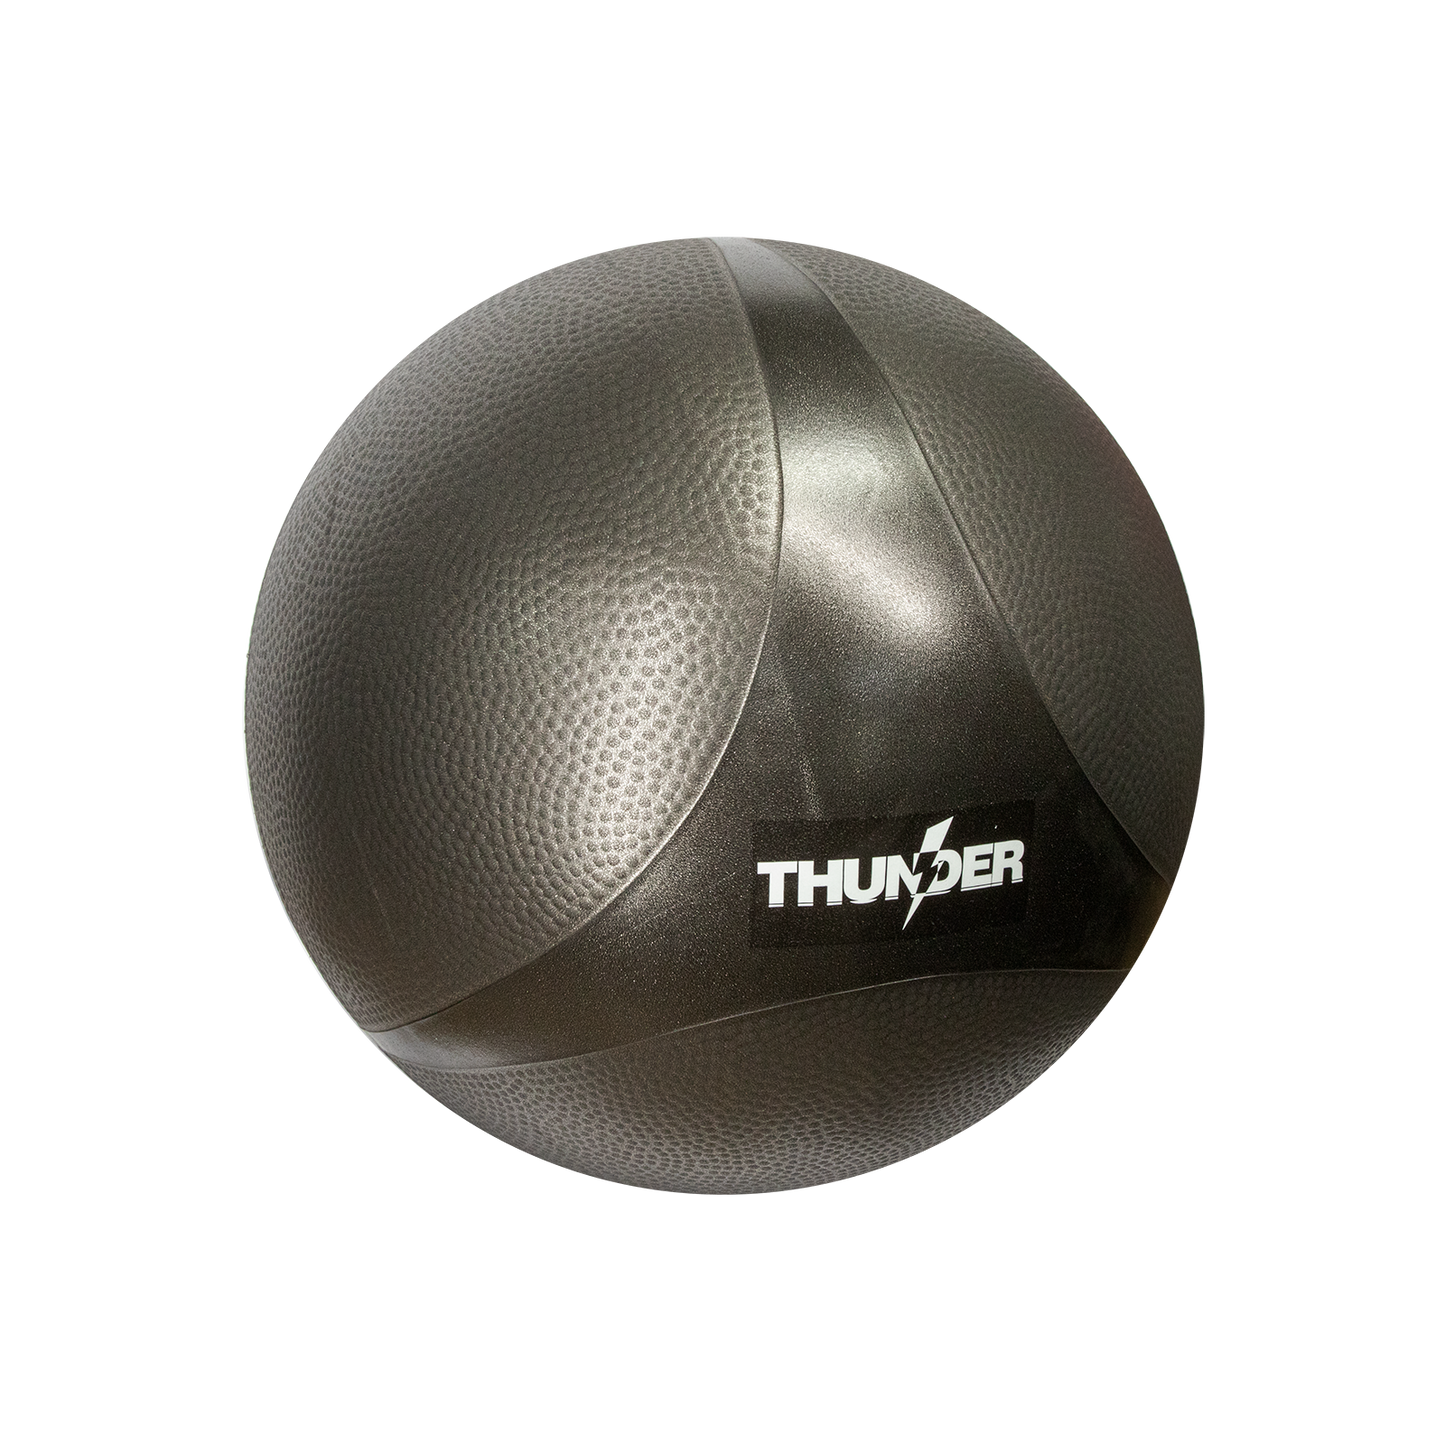 Yoga Ball 75cm